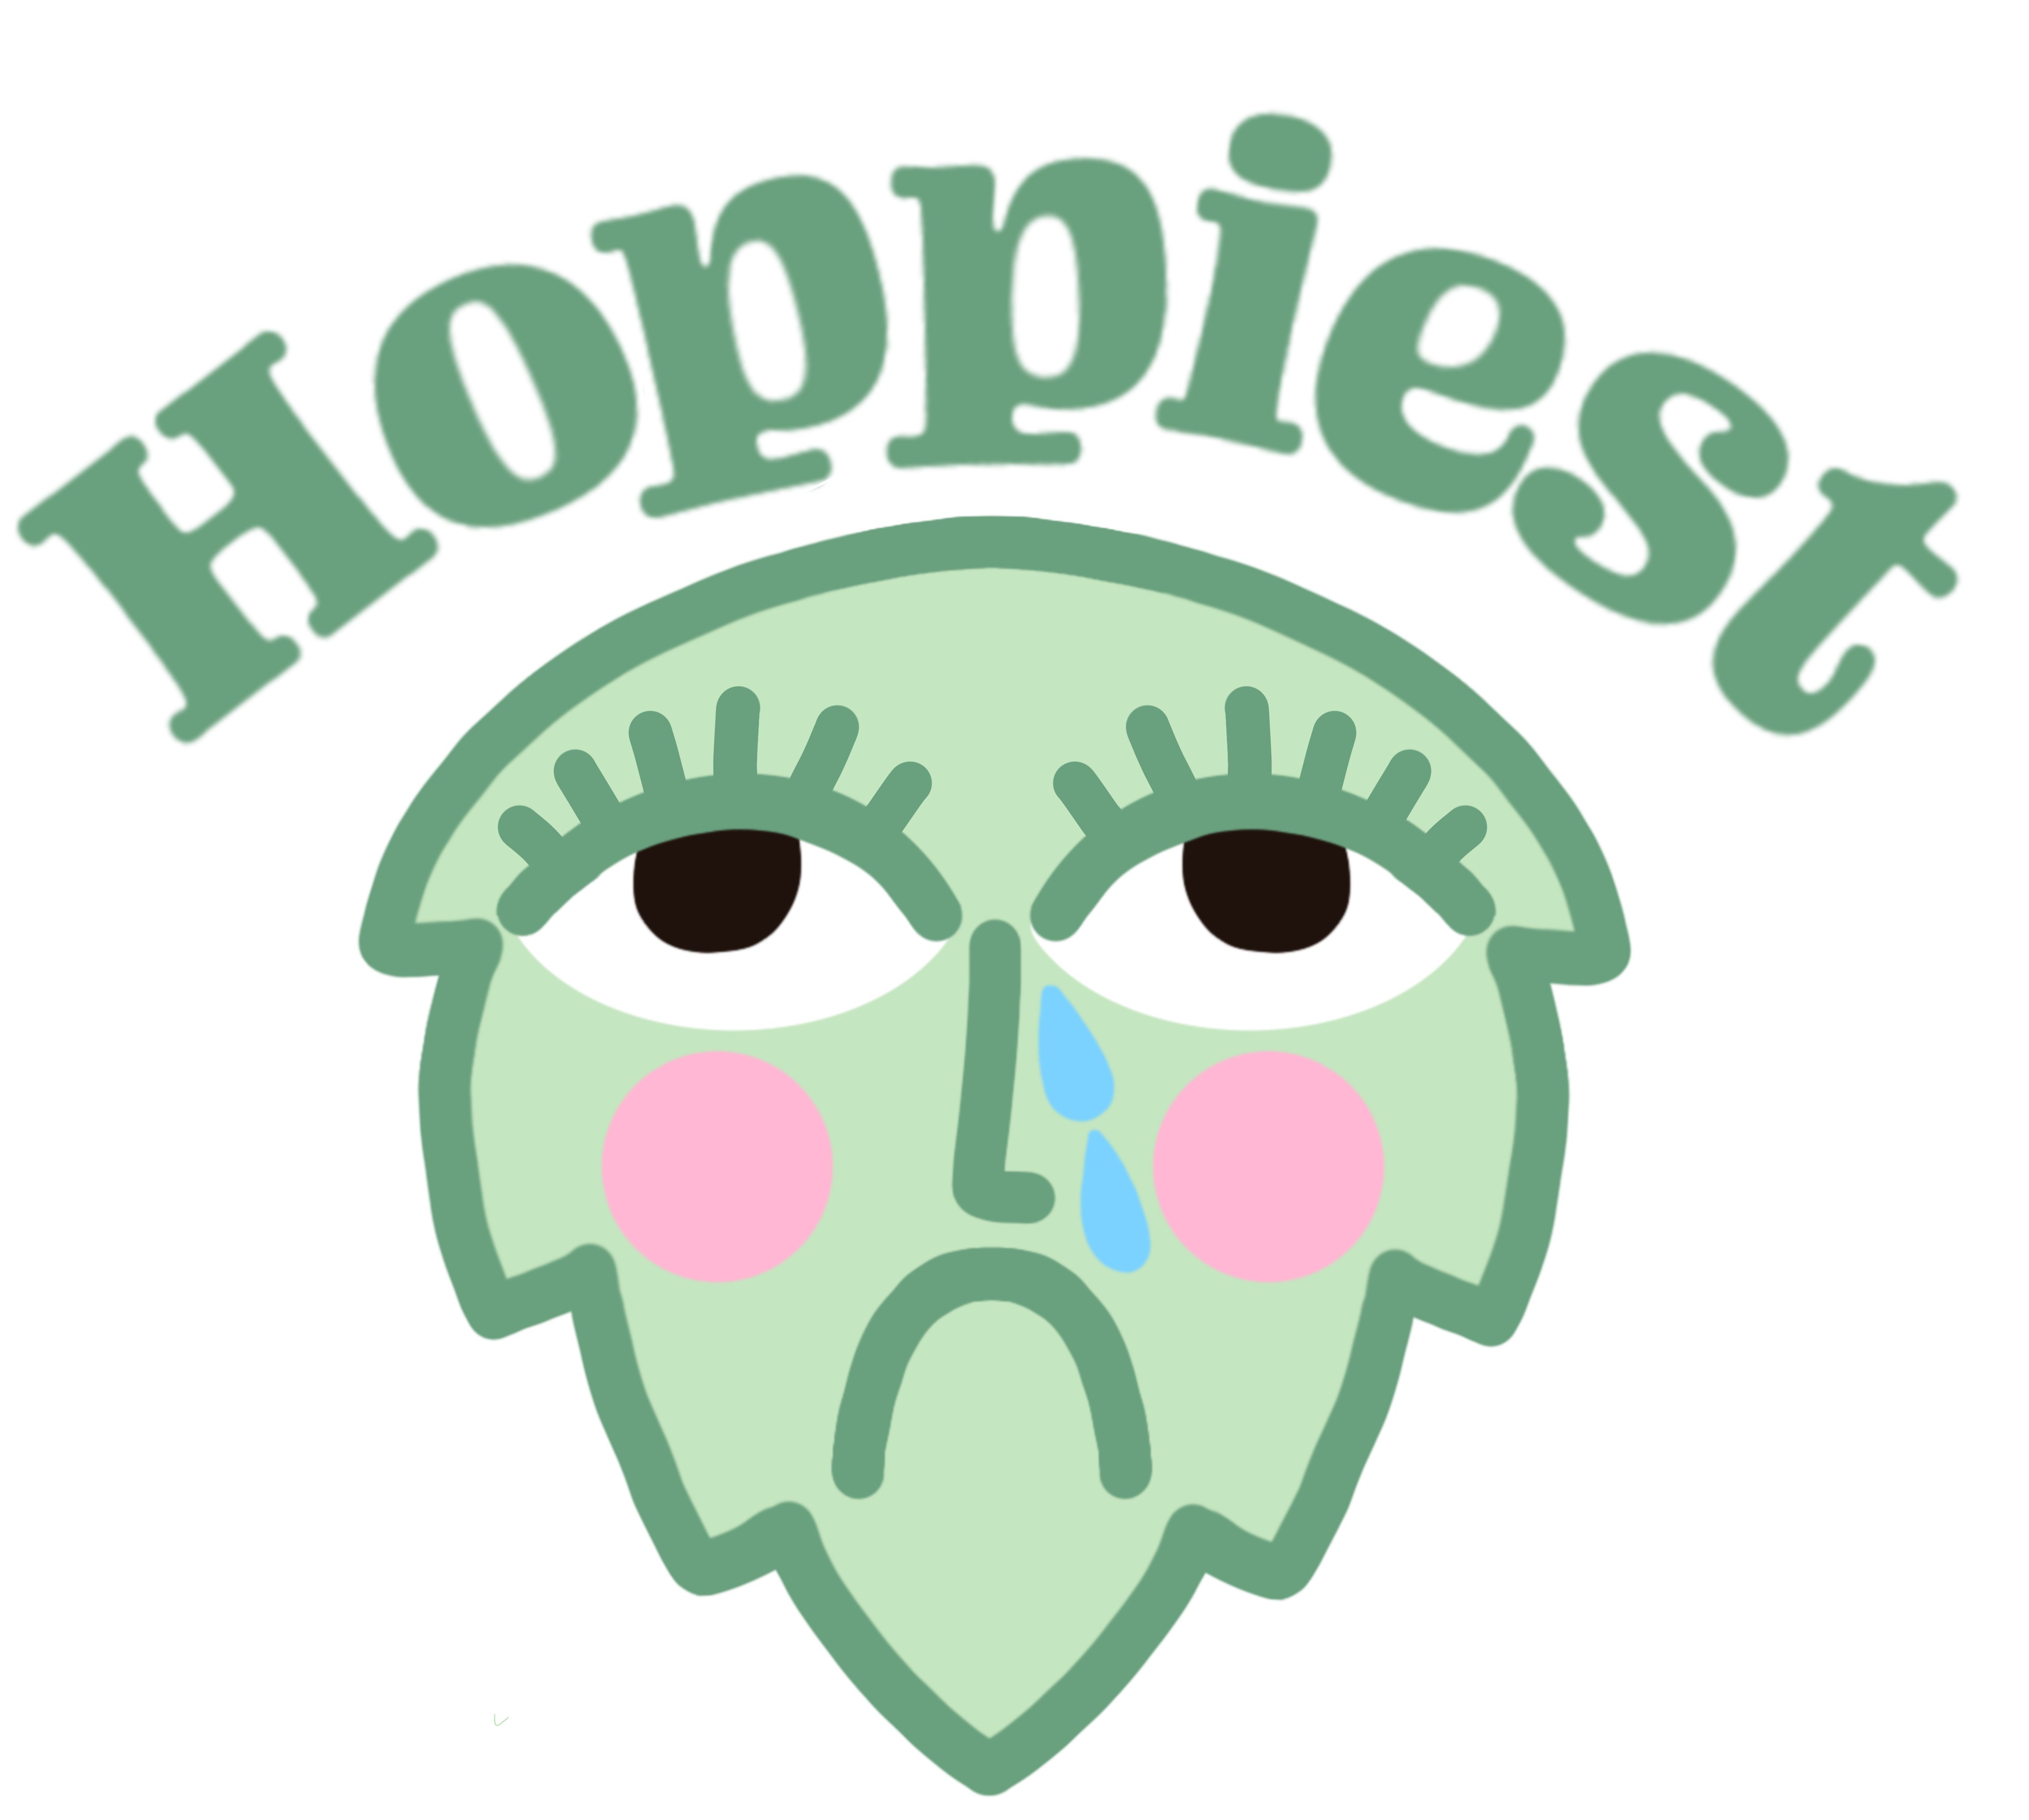 The Hoppiest Shop